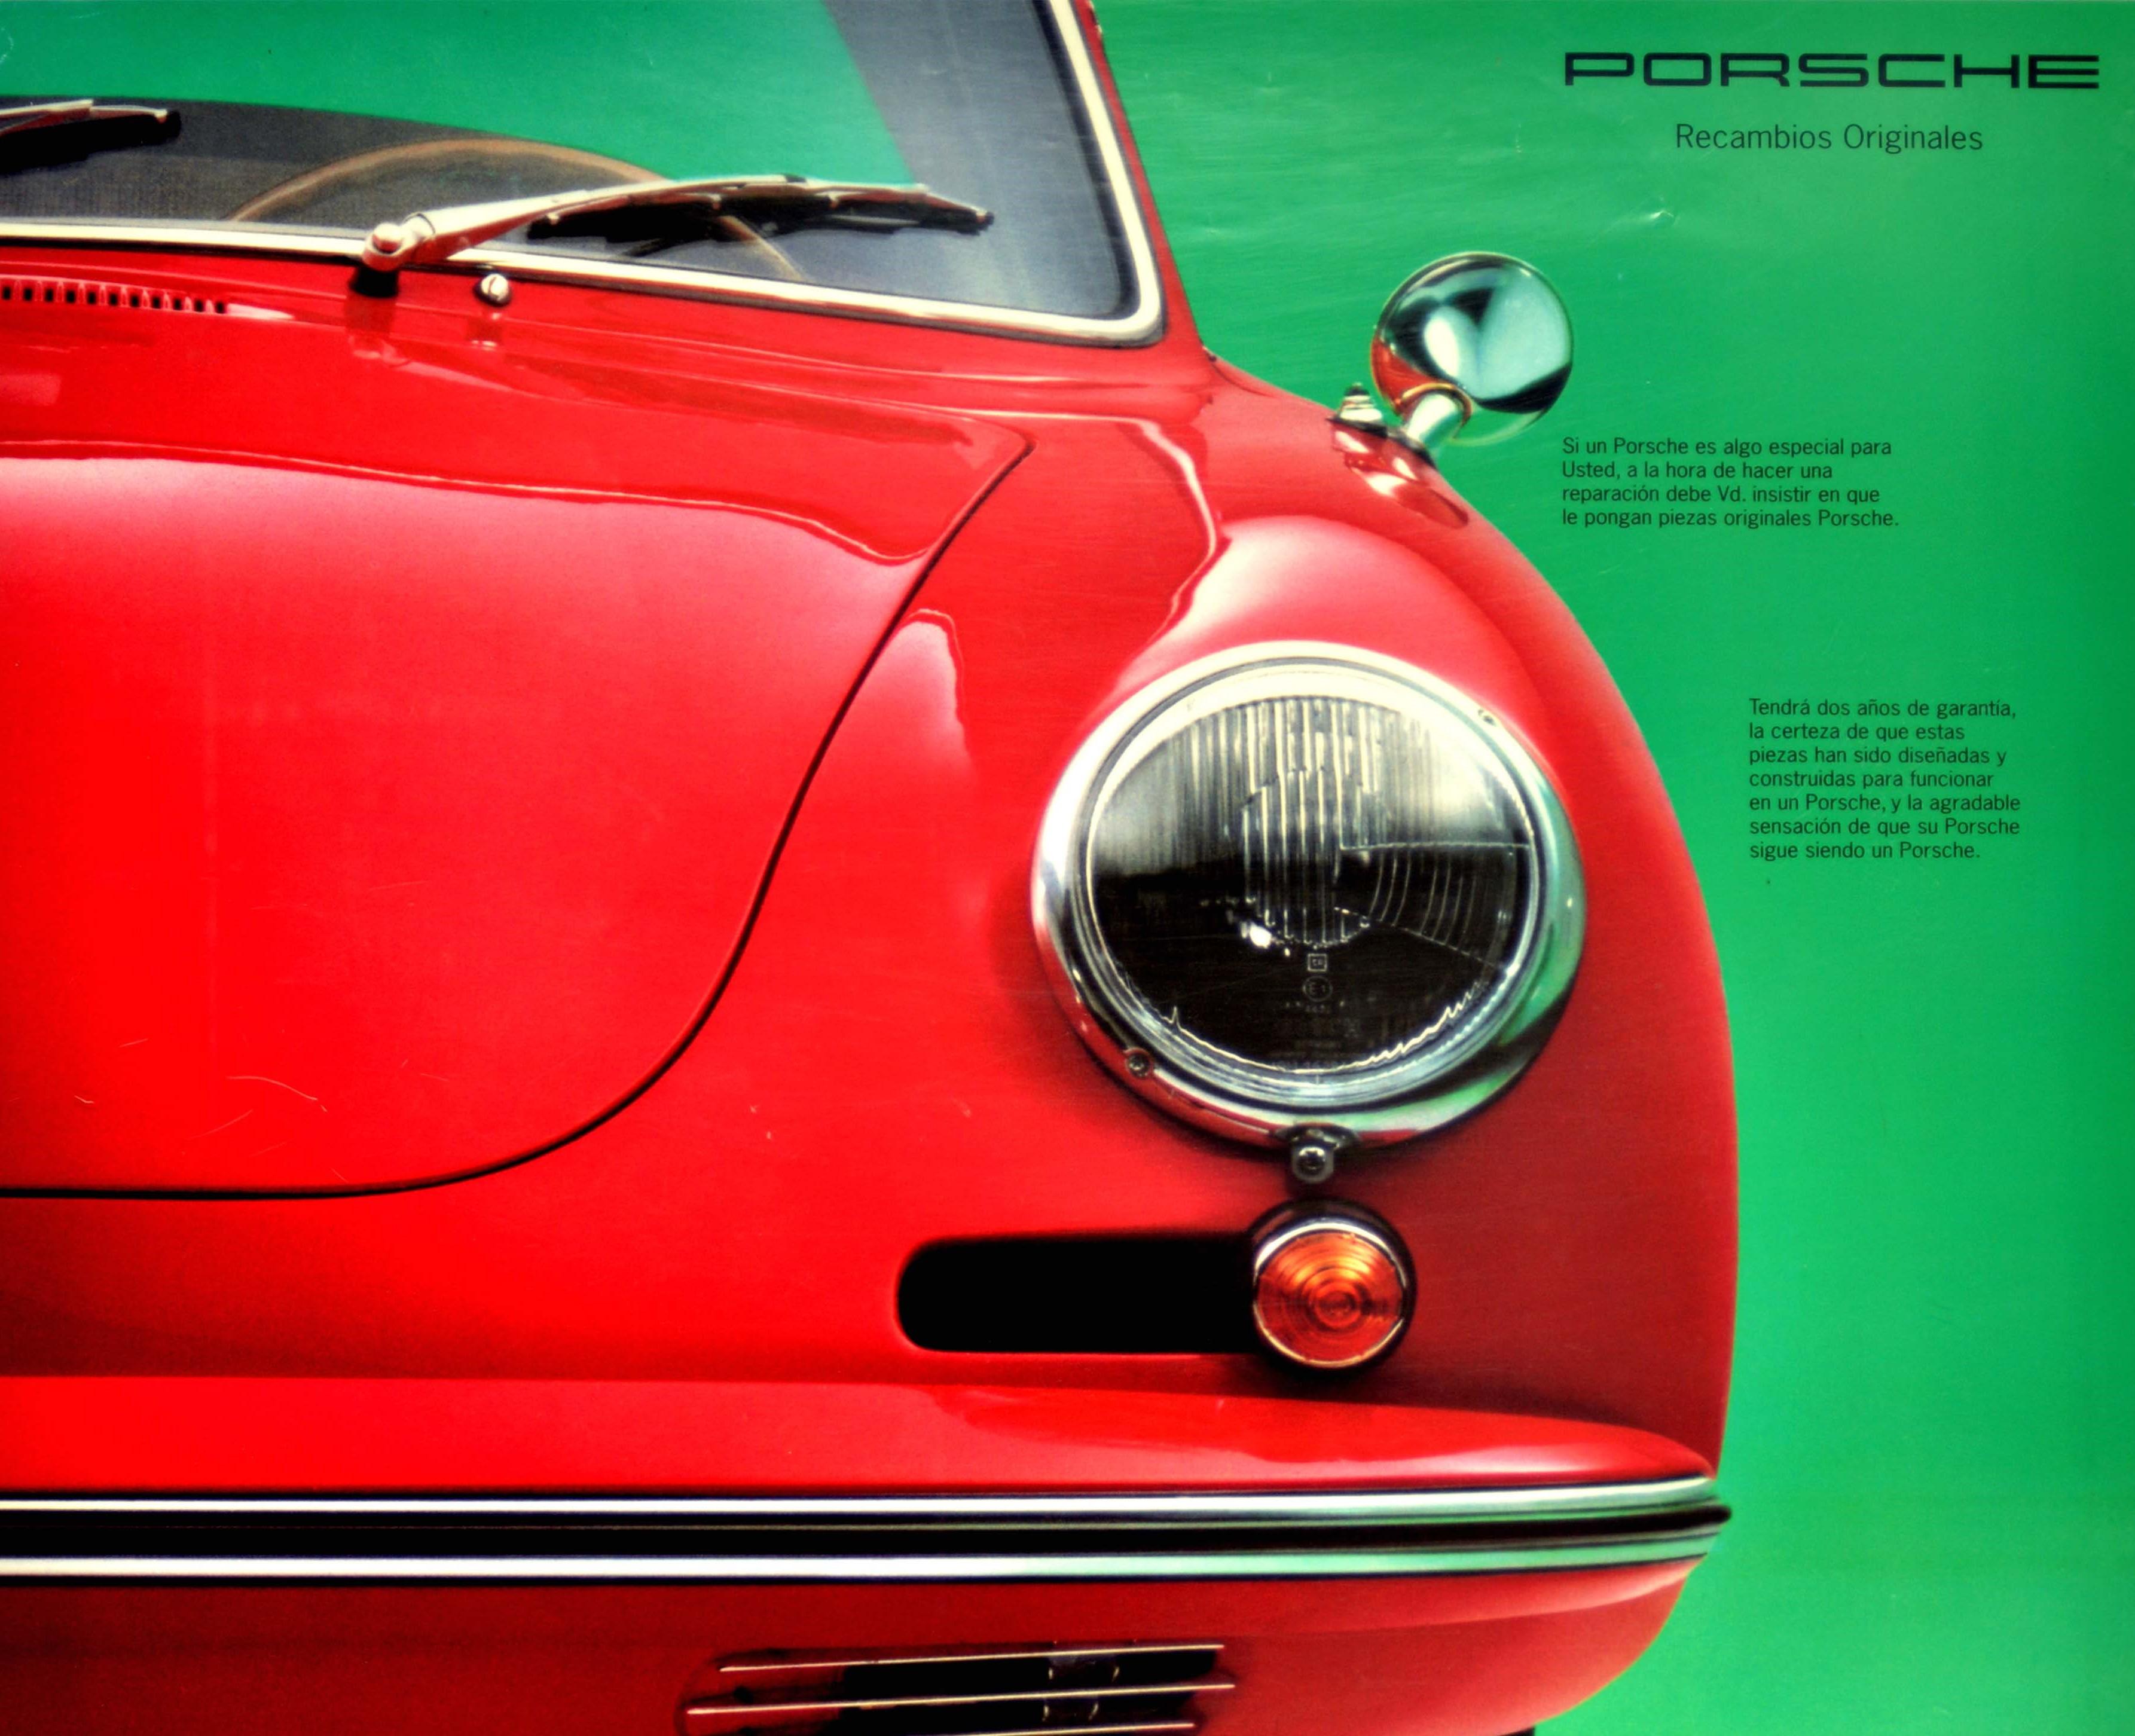 Original vintage car advertising poster - 85% of all Porsches built are still working. Because they are 100% Porsche / Porsche El 85% de todos los Porsche construidos siguen funcionando. Porque son 100% Porsche. - featuring a great design showing